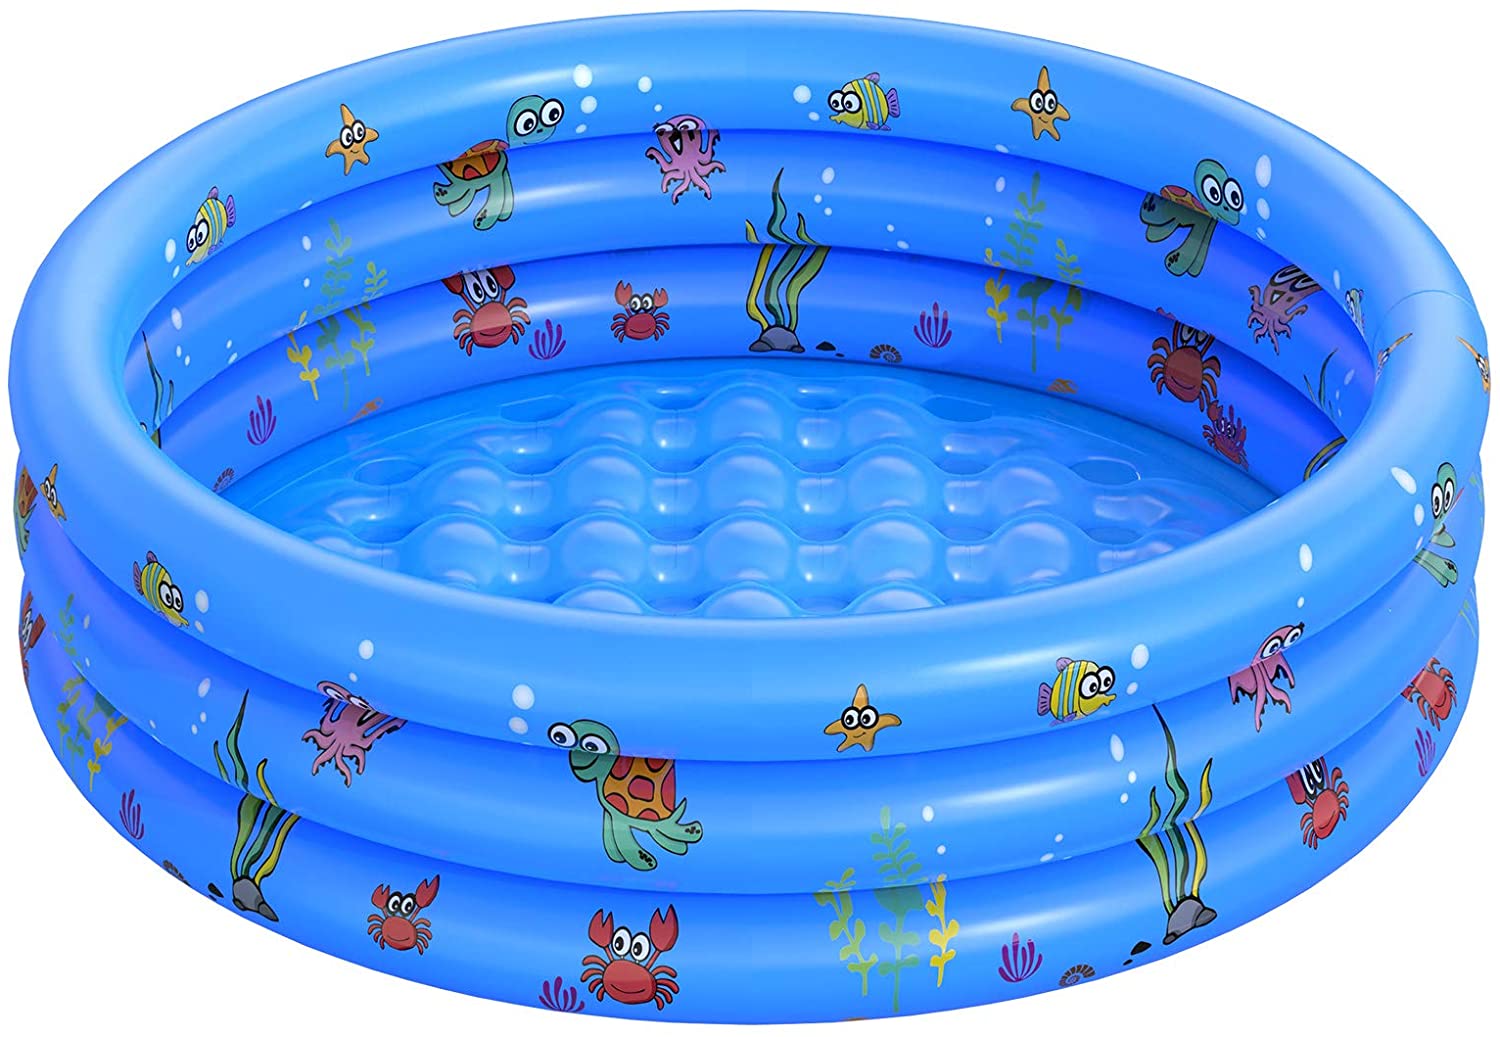 VIVI MAO Kid’s Non-Toxic Inflatable Pool, 47-Inch